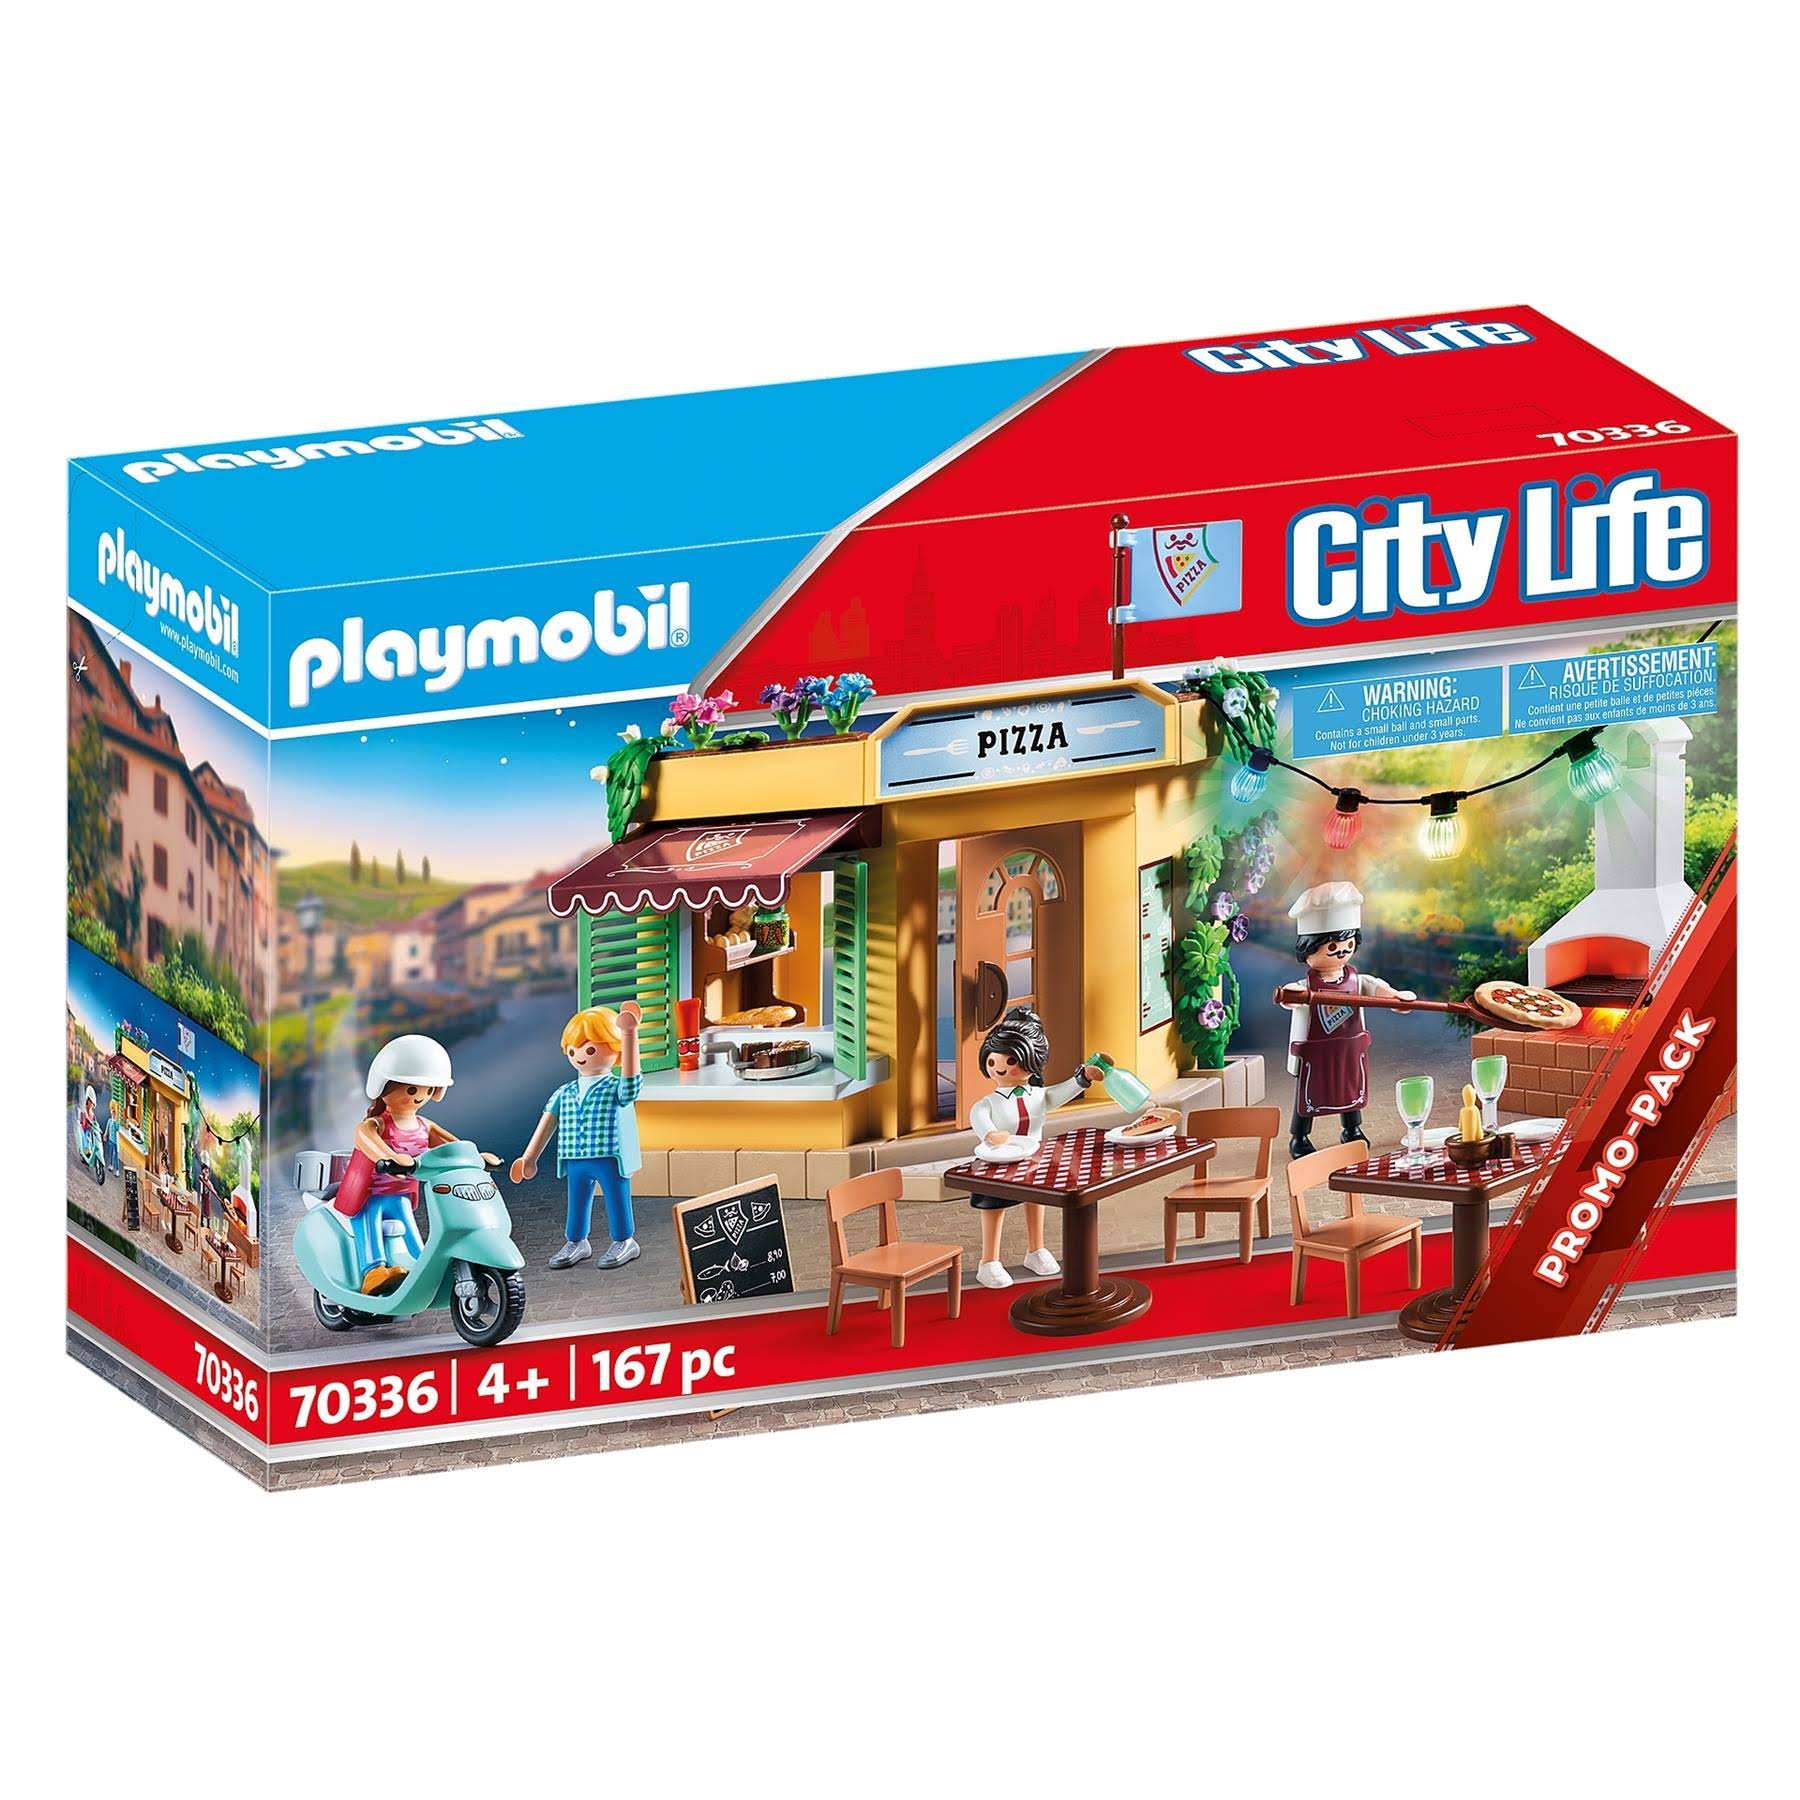 Playmobil 70336 City Life pizzeria